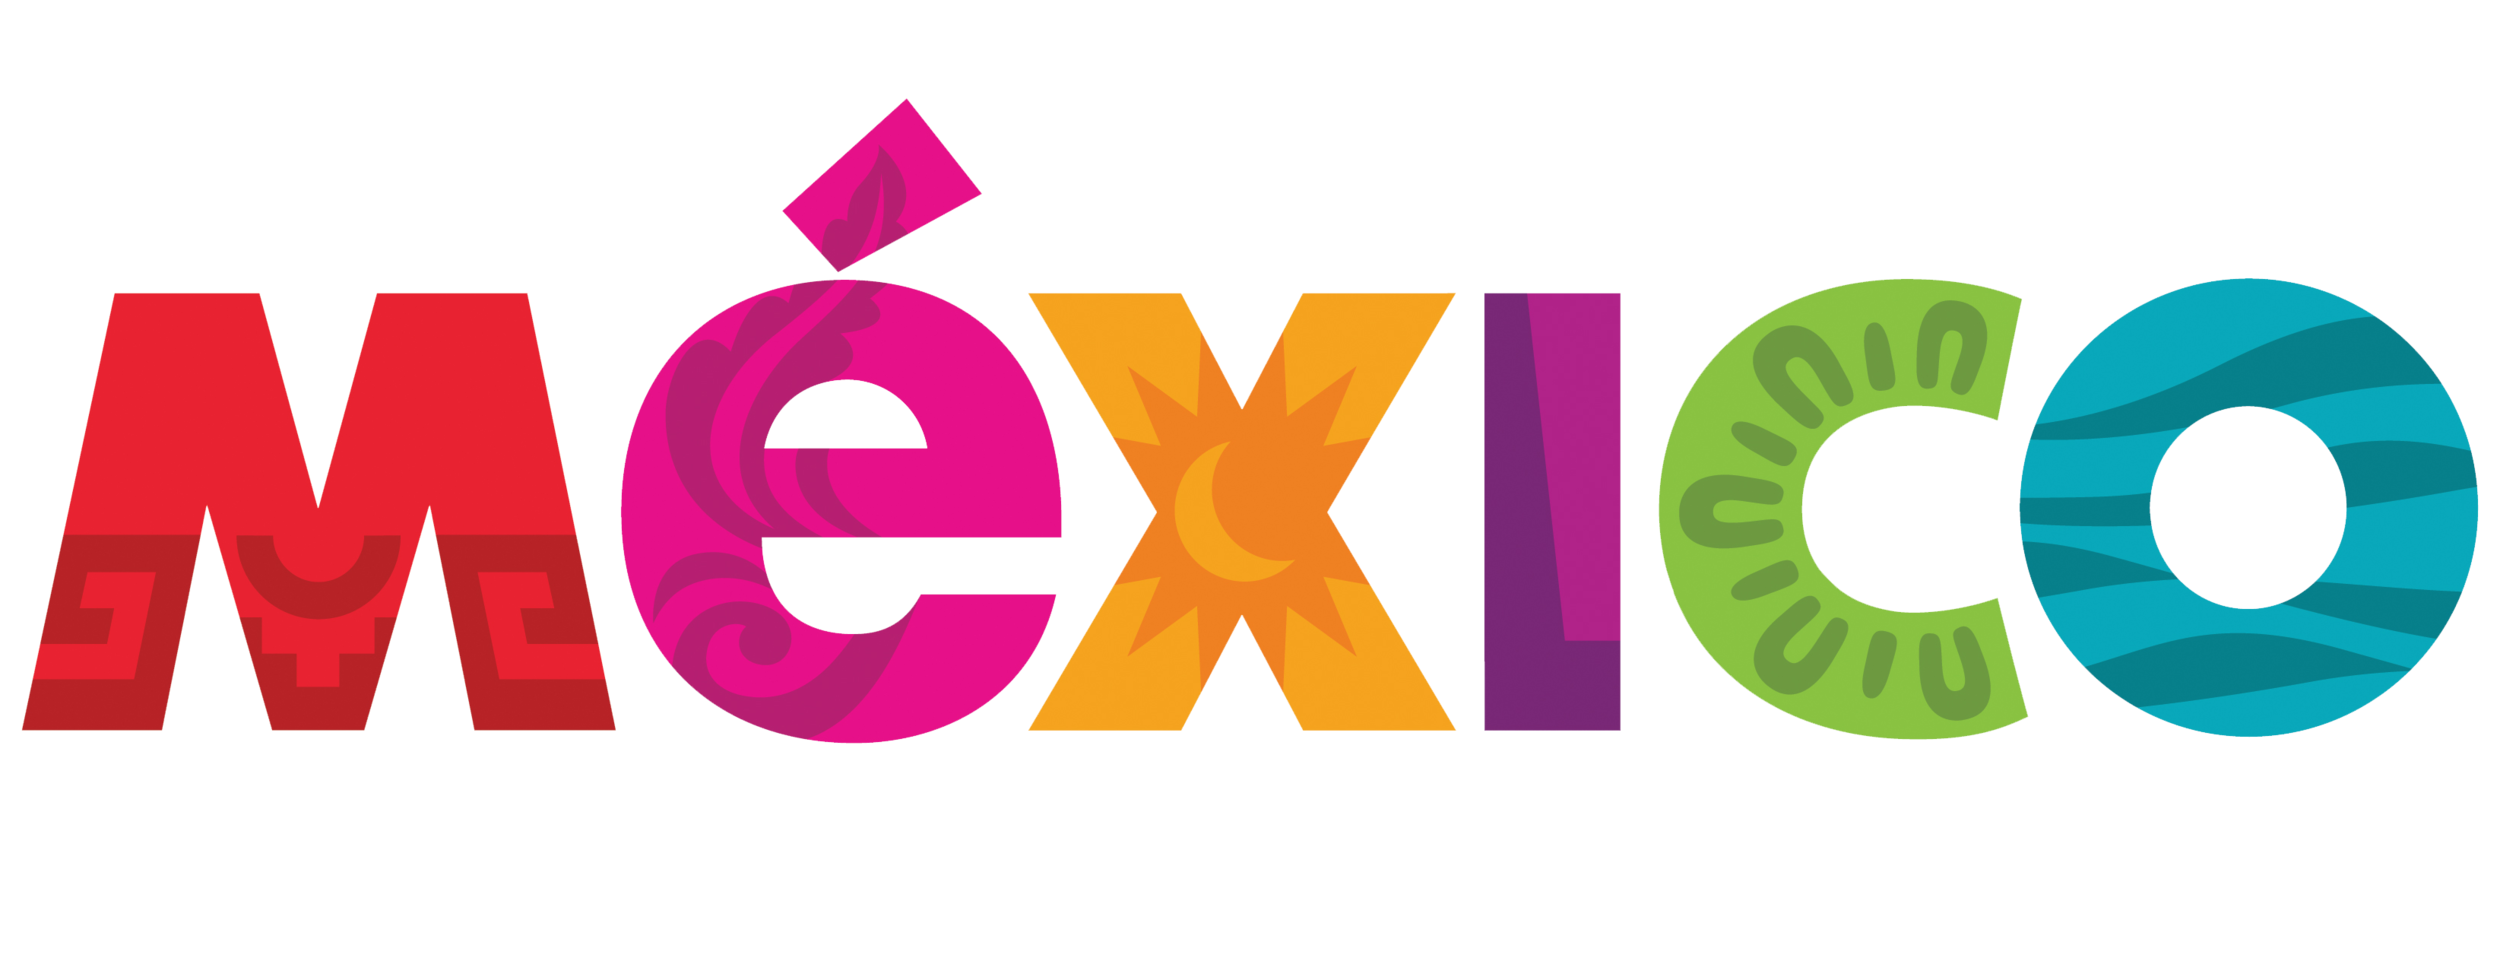 VisitMexico-logo.png